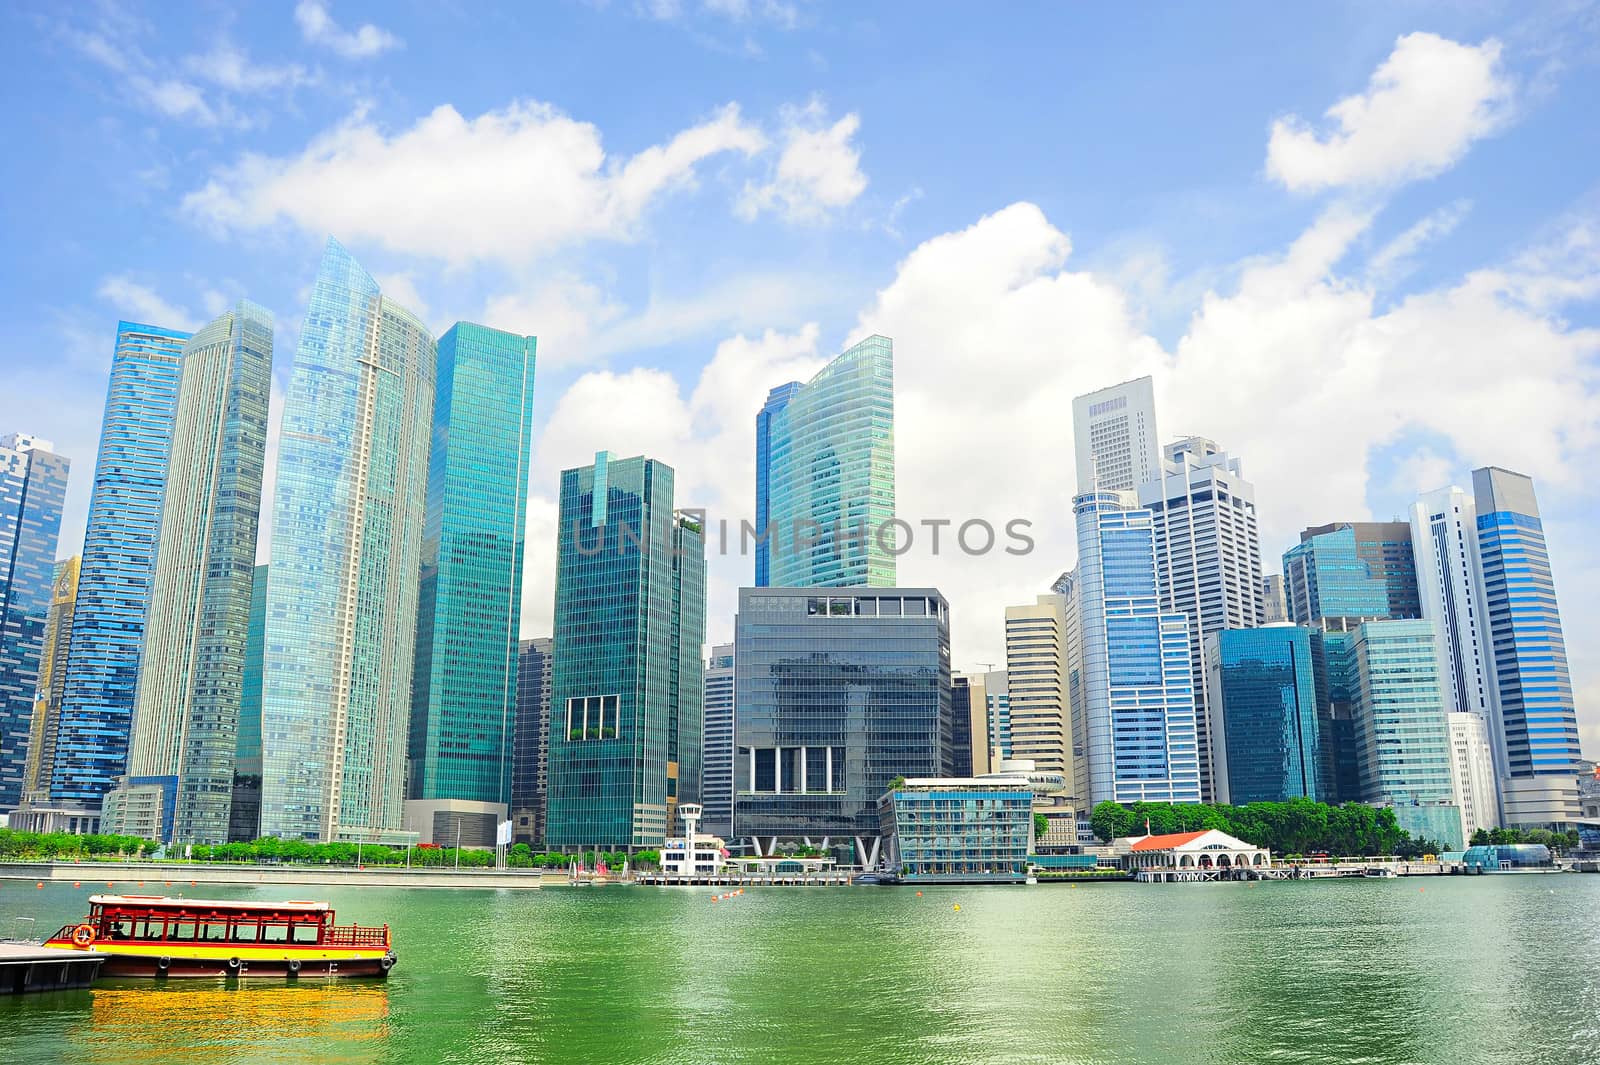  Singapore city center by joyfull